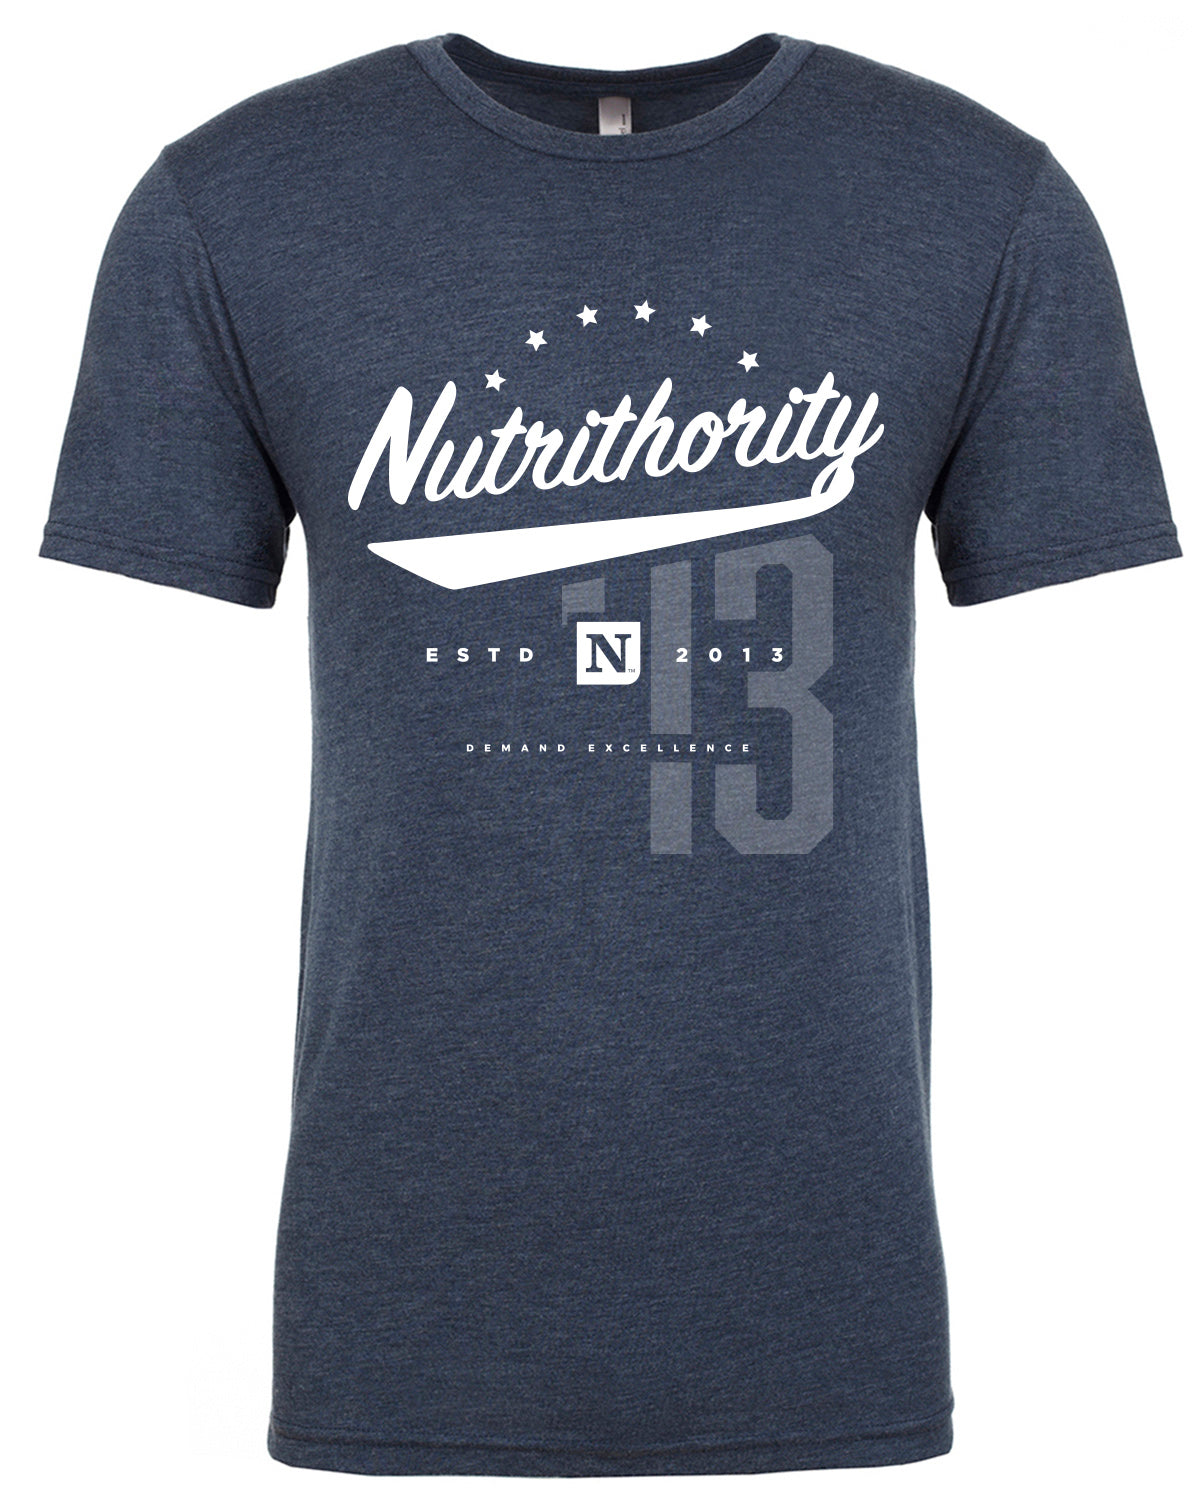 Nutrithority All Star Tshirt